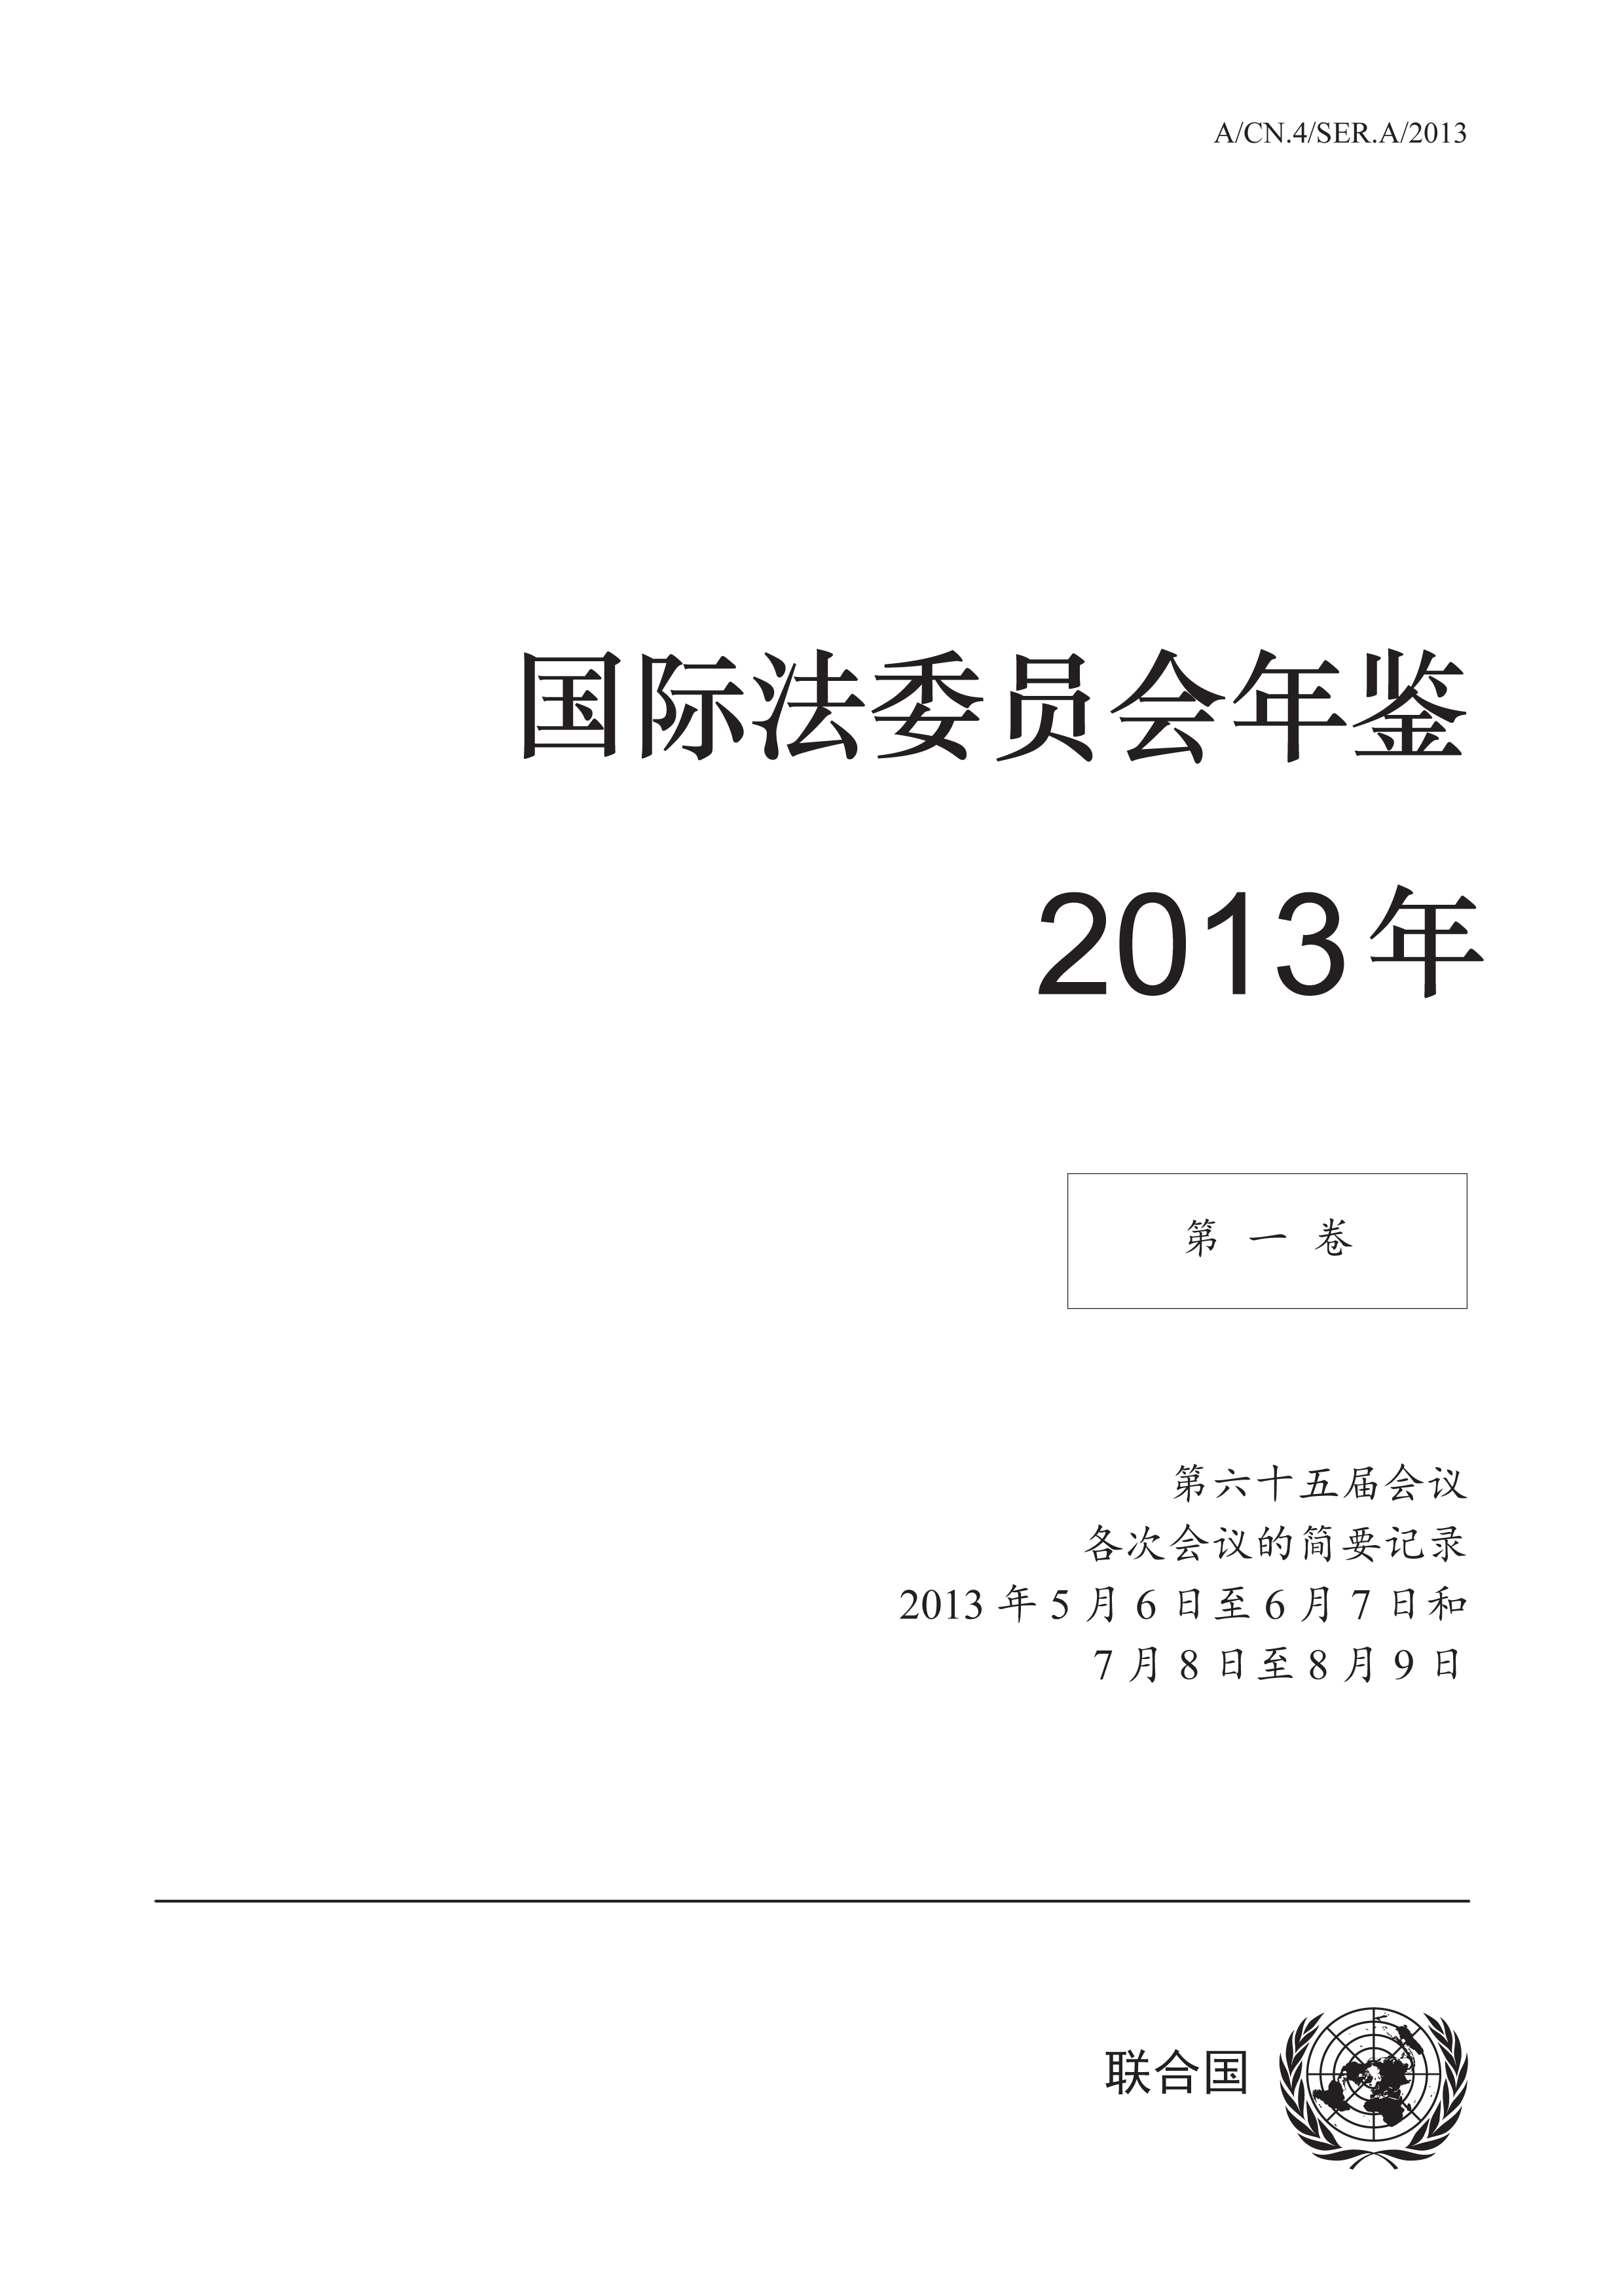 image of 国际法委员会年鉴 2013年, 第一卷